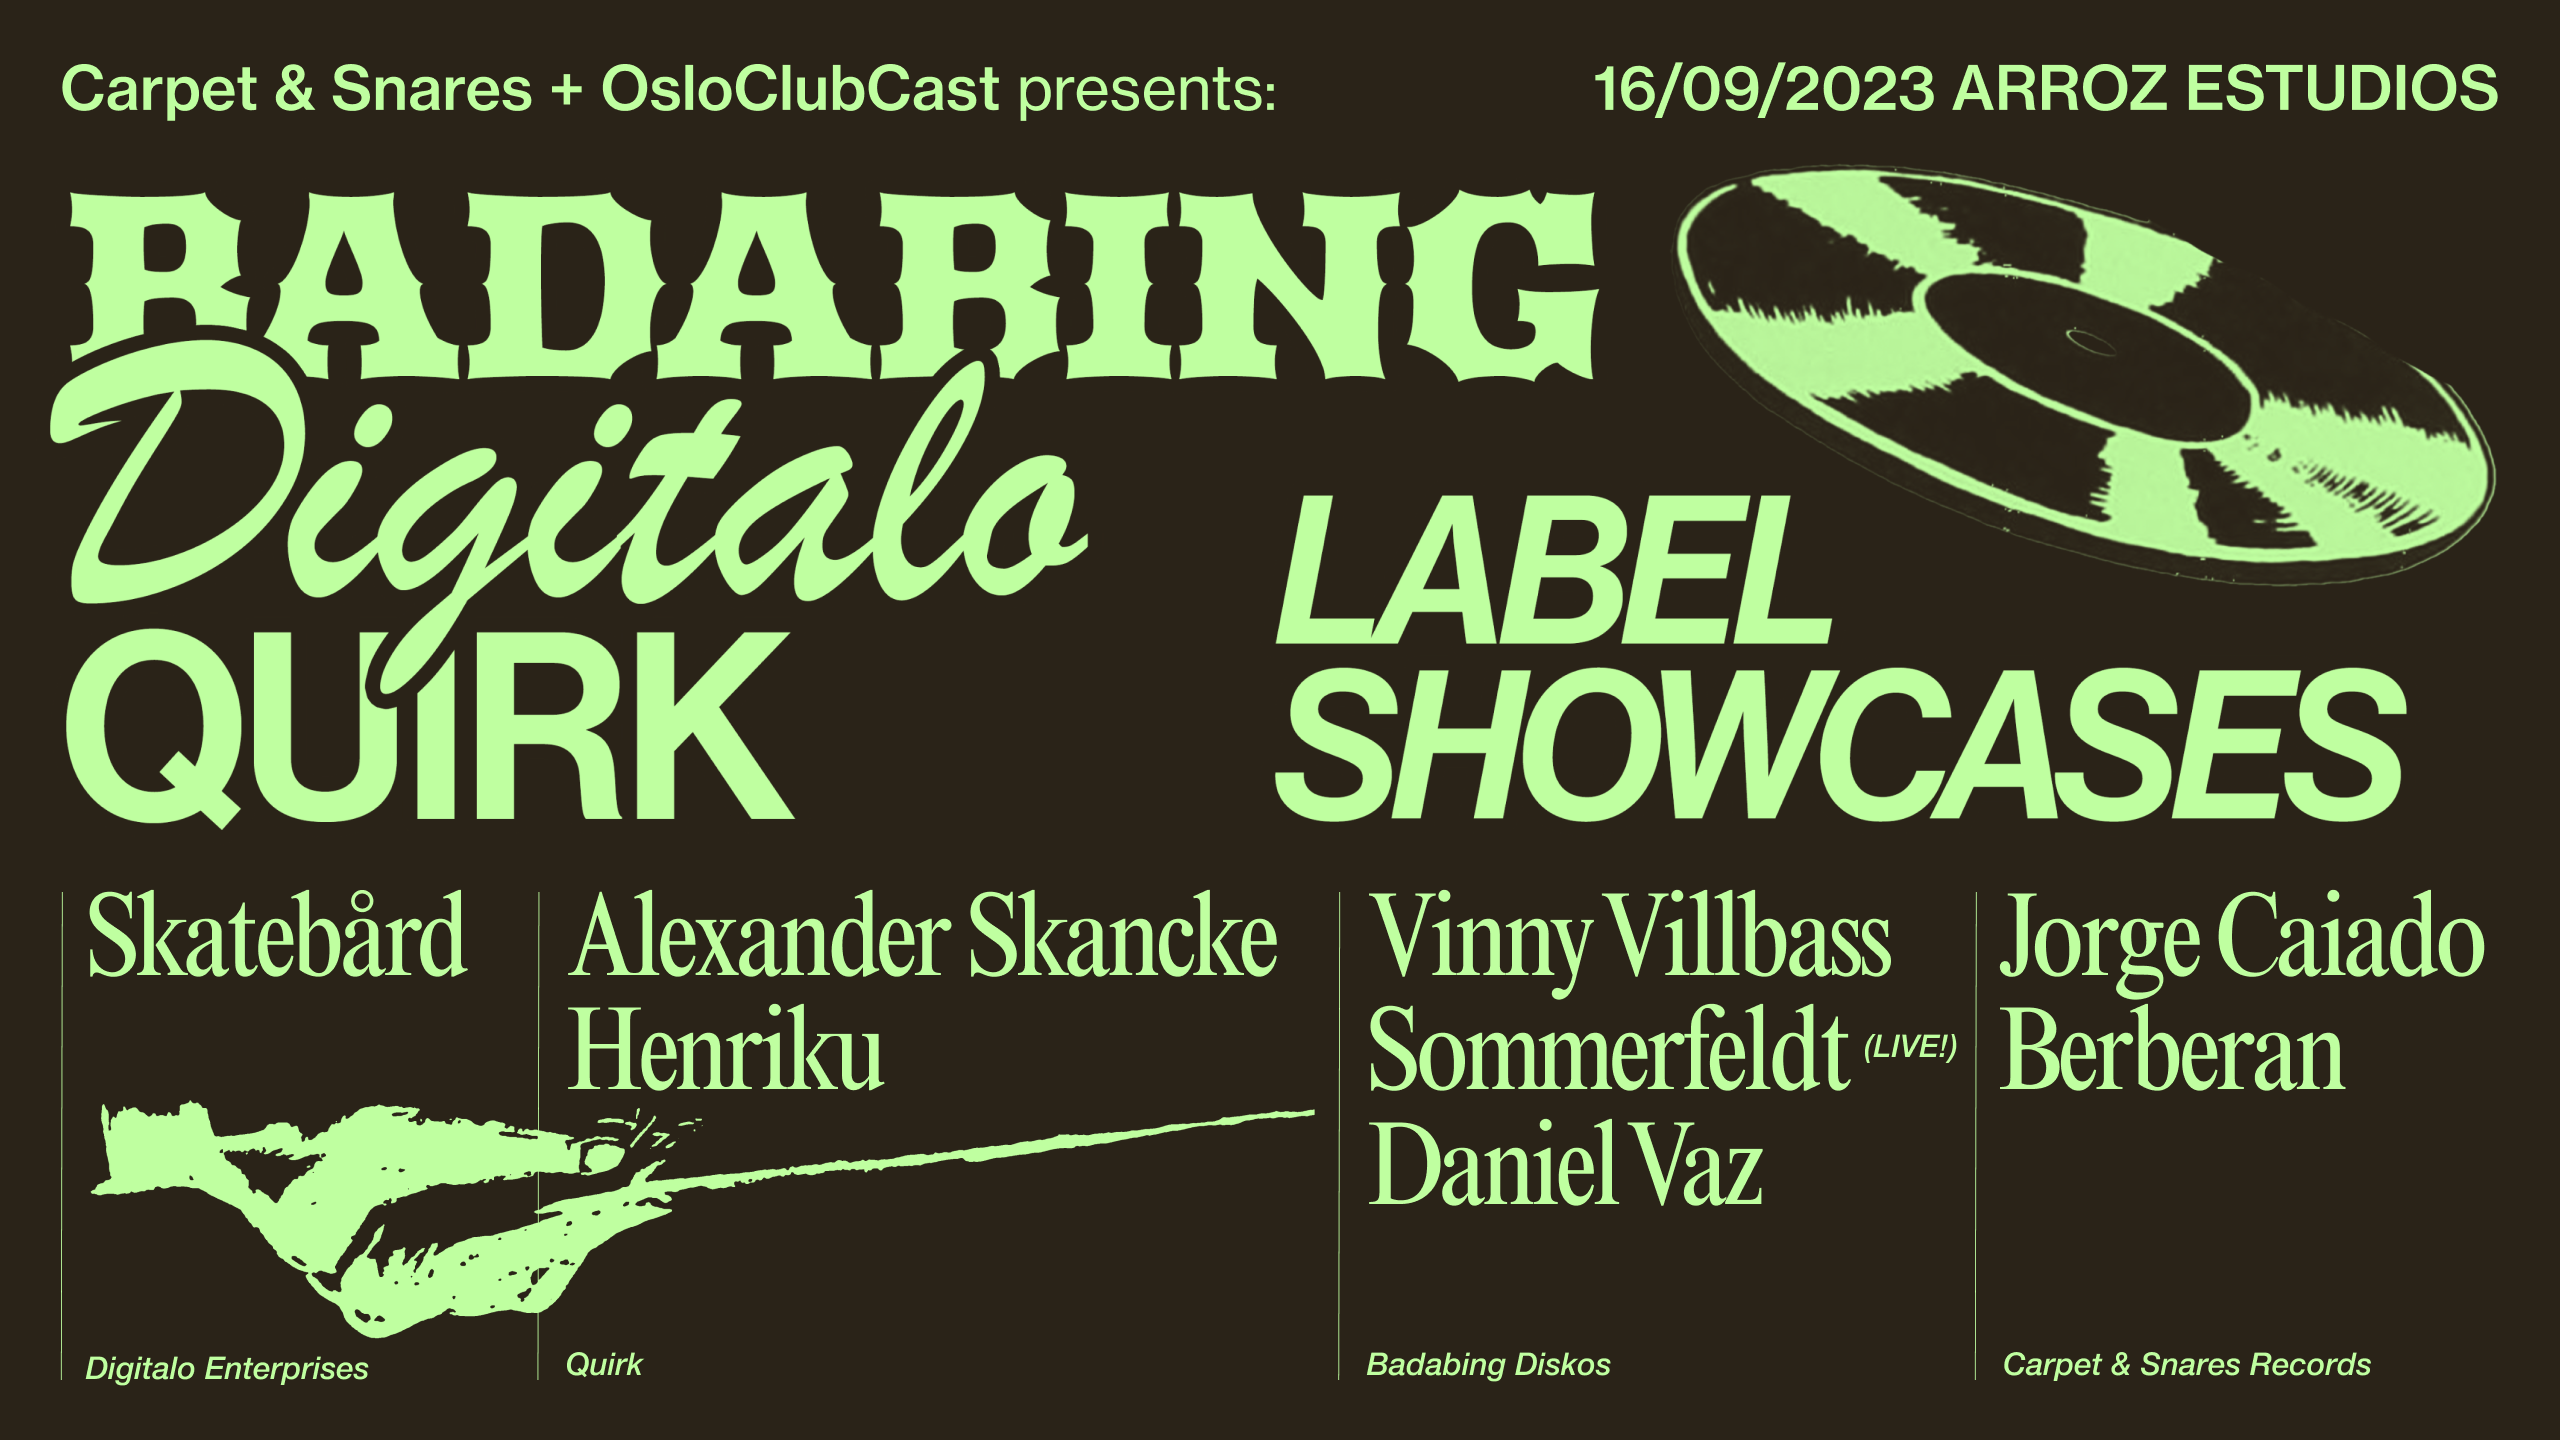 Carpet & Snares + OsloClubCast presents: Badabing, Digitalo, Quirk Label Showcases - フライヤー裏